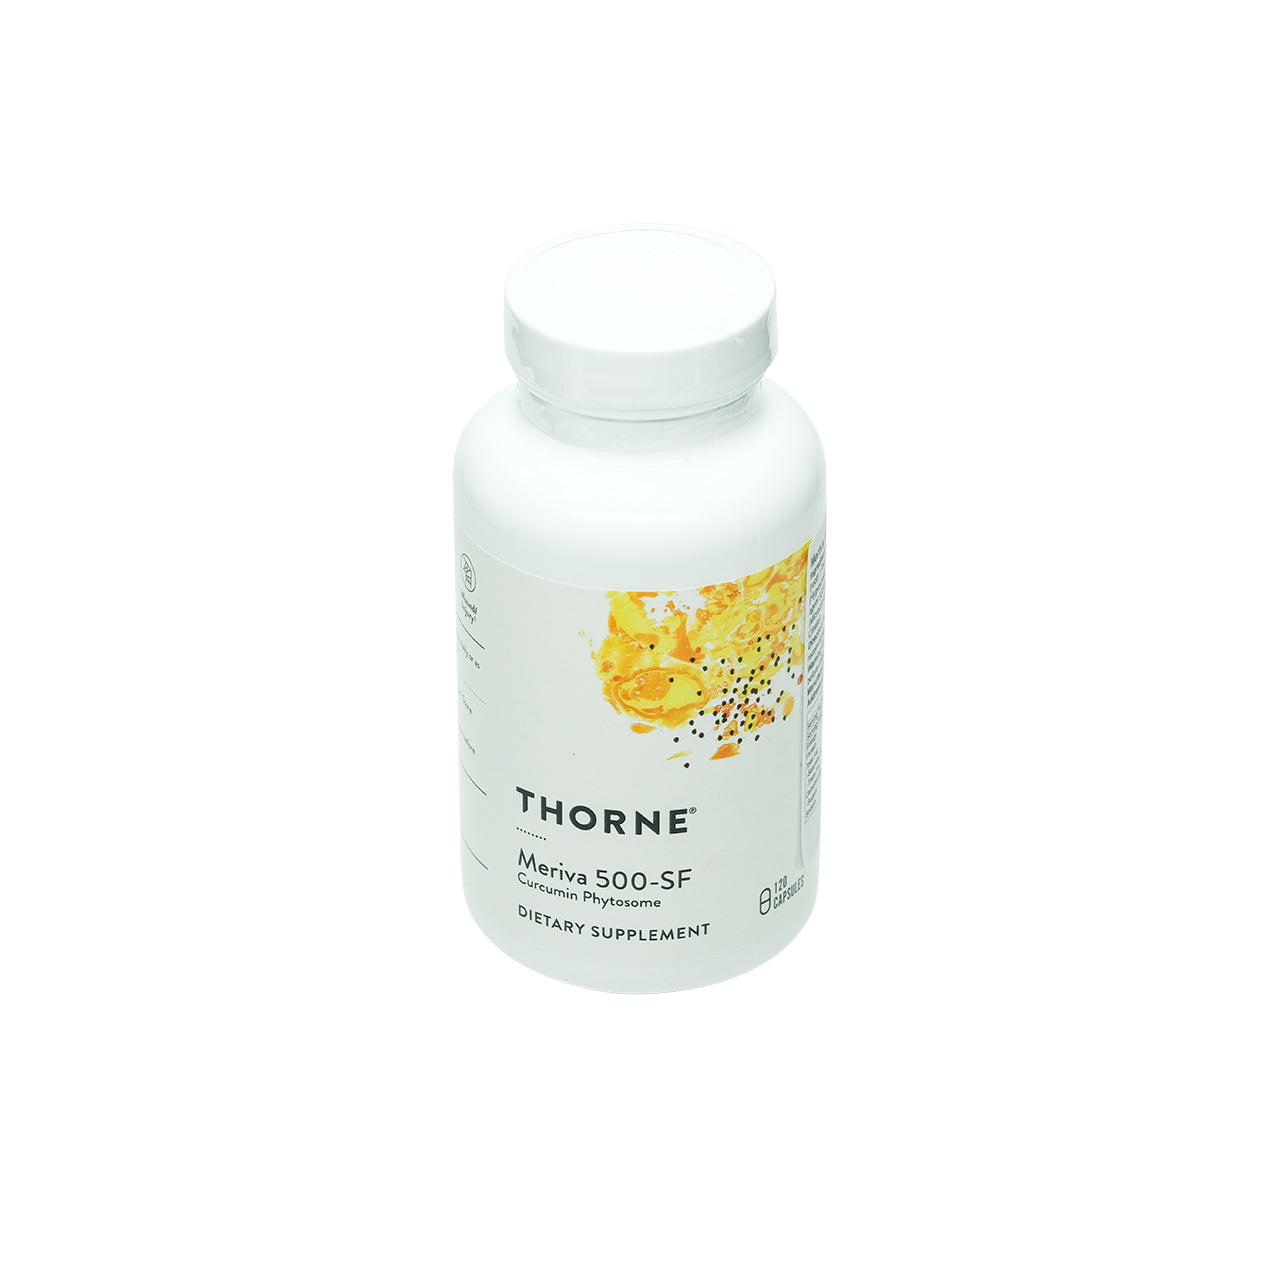 Thorne Curcumin Phytosome Formerly Meriva 120 Tablets | Sasa Global eShop